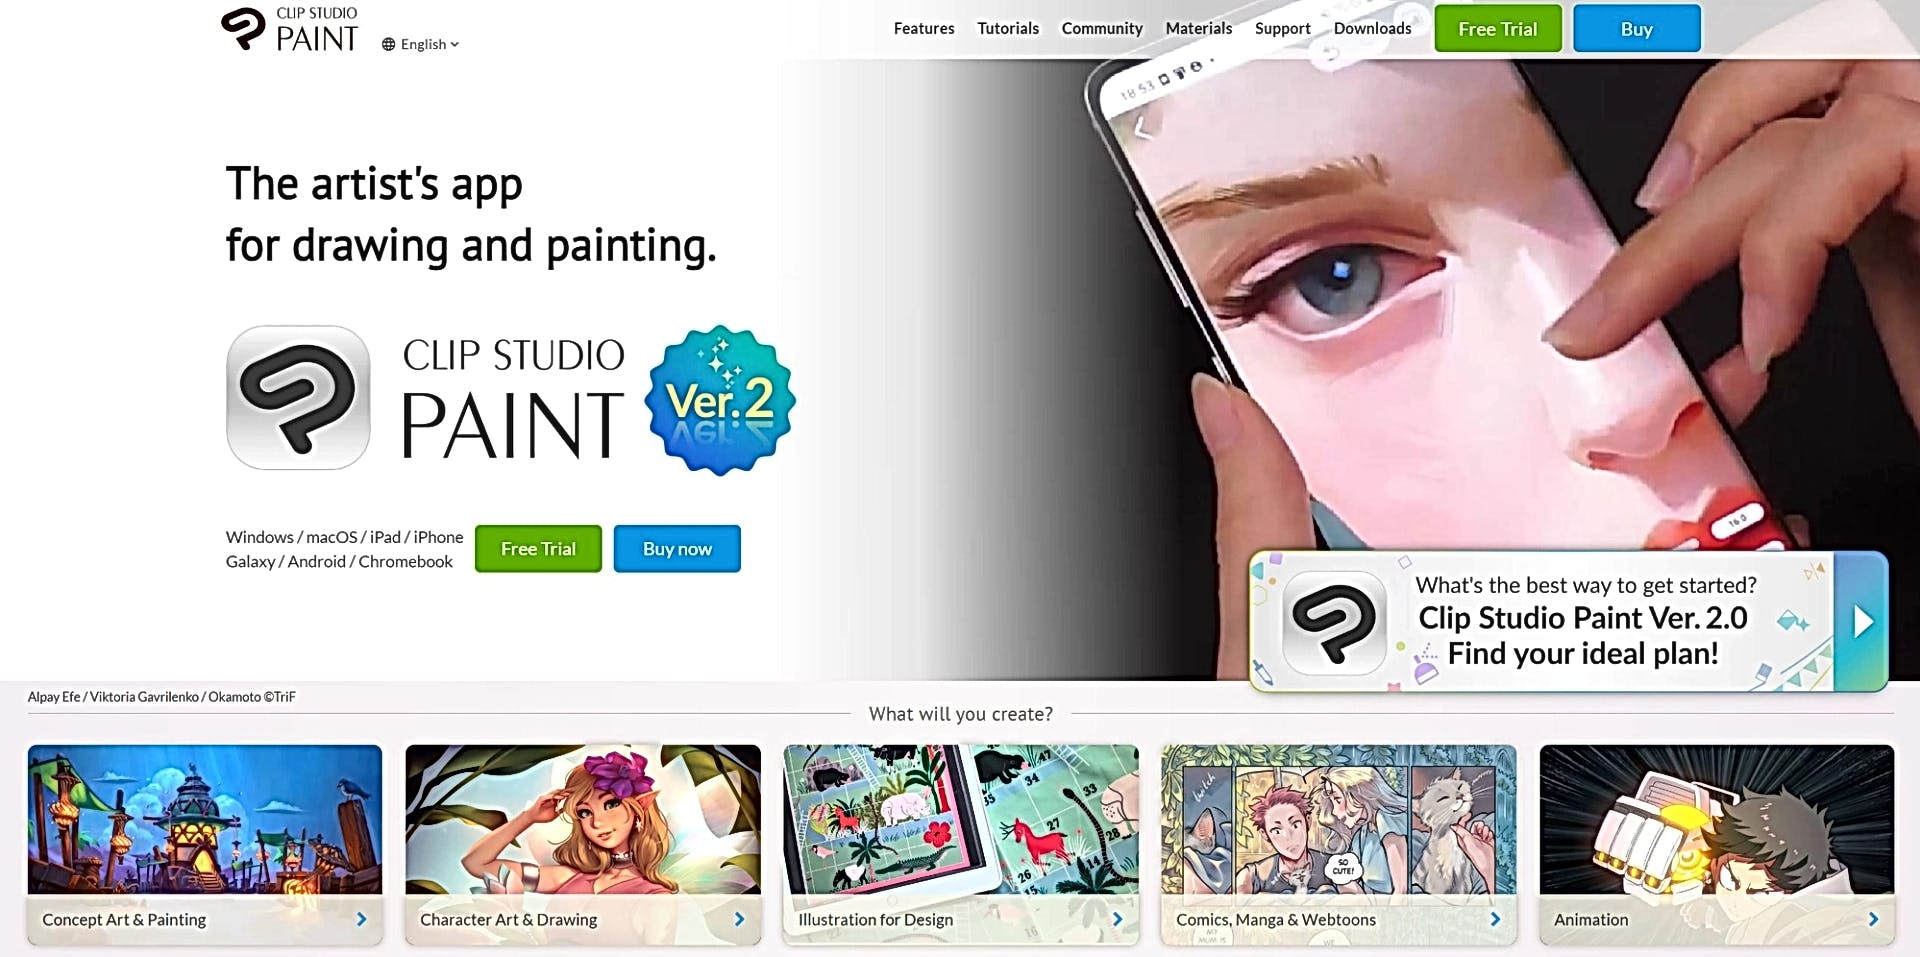 Clip Studio Paint featured